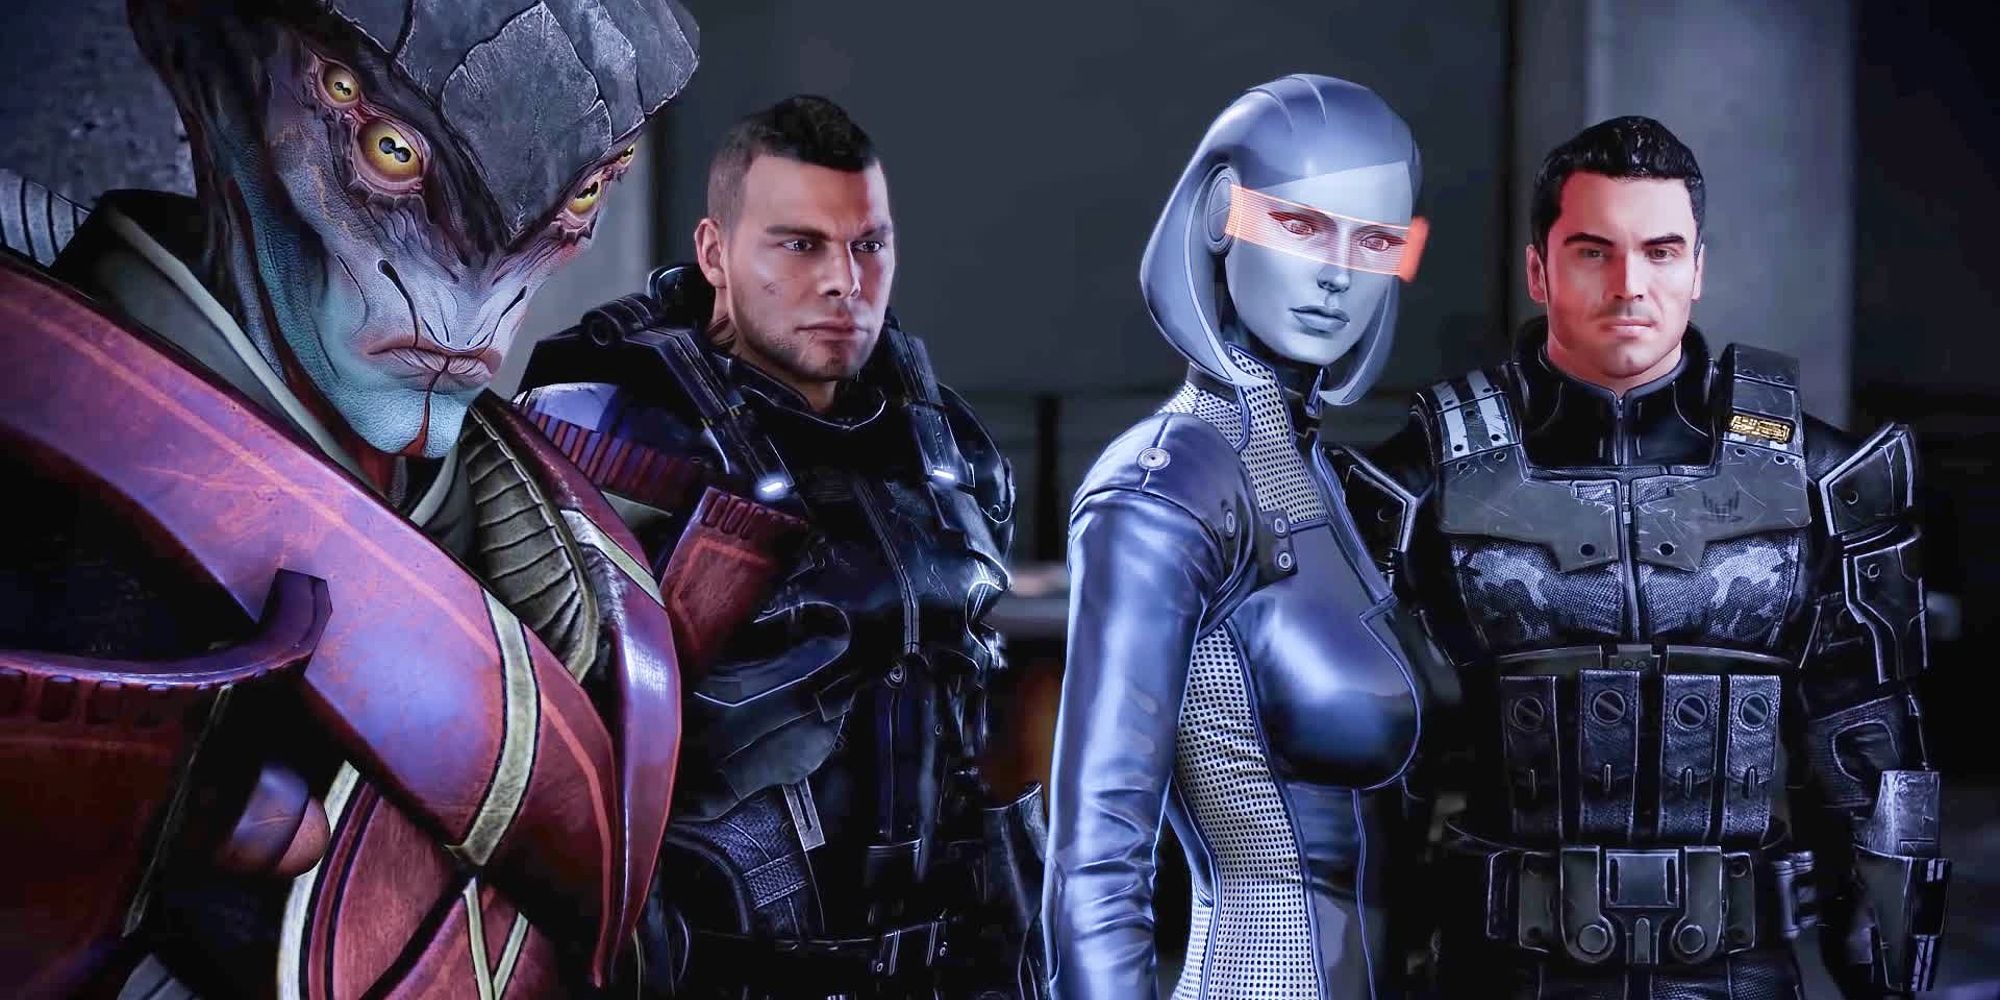 Image of the Mass Effect 3 crew Javik, James Vega, EDI, and Kaidan Alenko.